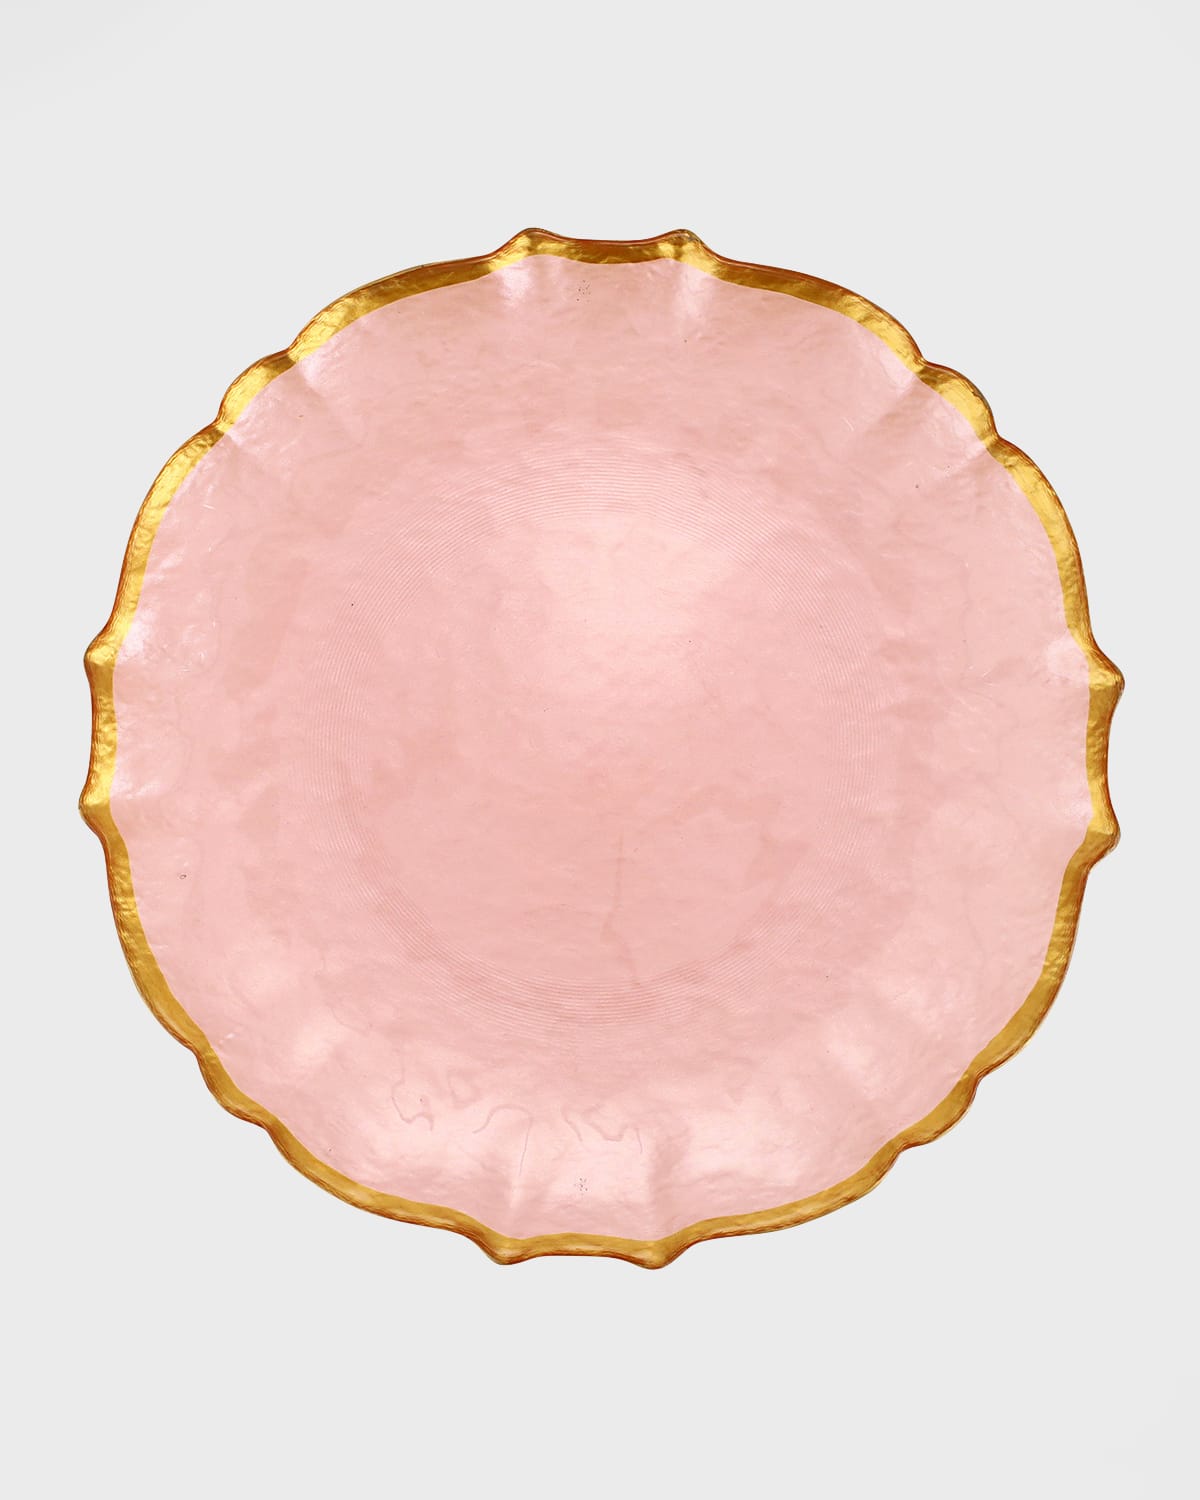 Vietri Baroque Glass Dinner Plate In Pink